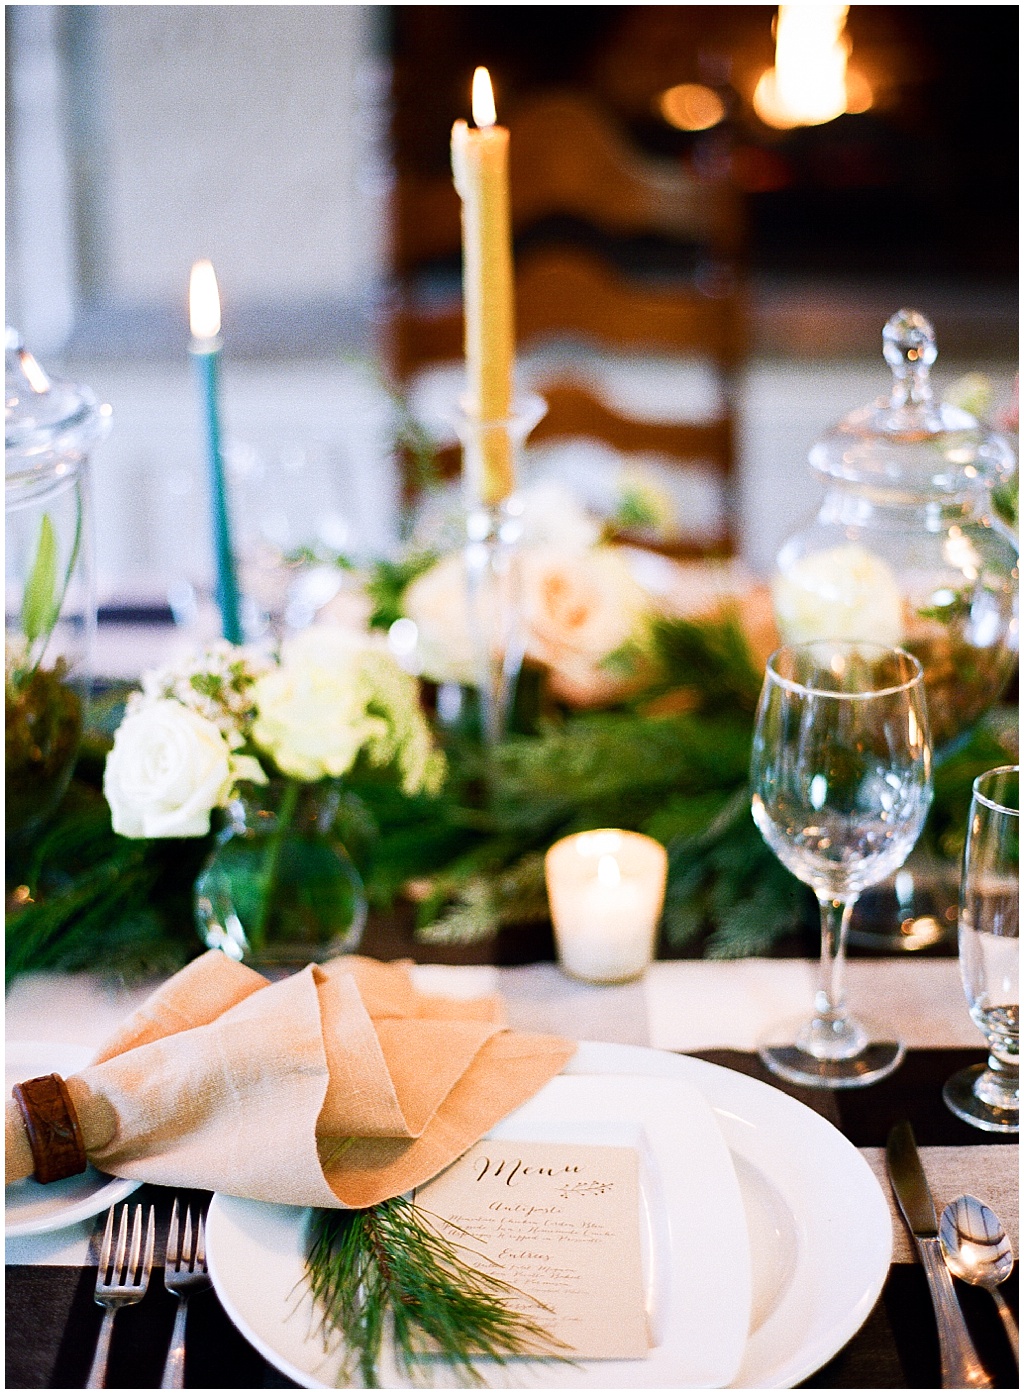 Wedding Styling and Design LoveWell Weddings, Taken by Sarah Photography, Fingerlakes Wedding Style Photoshoot